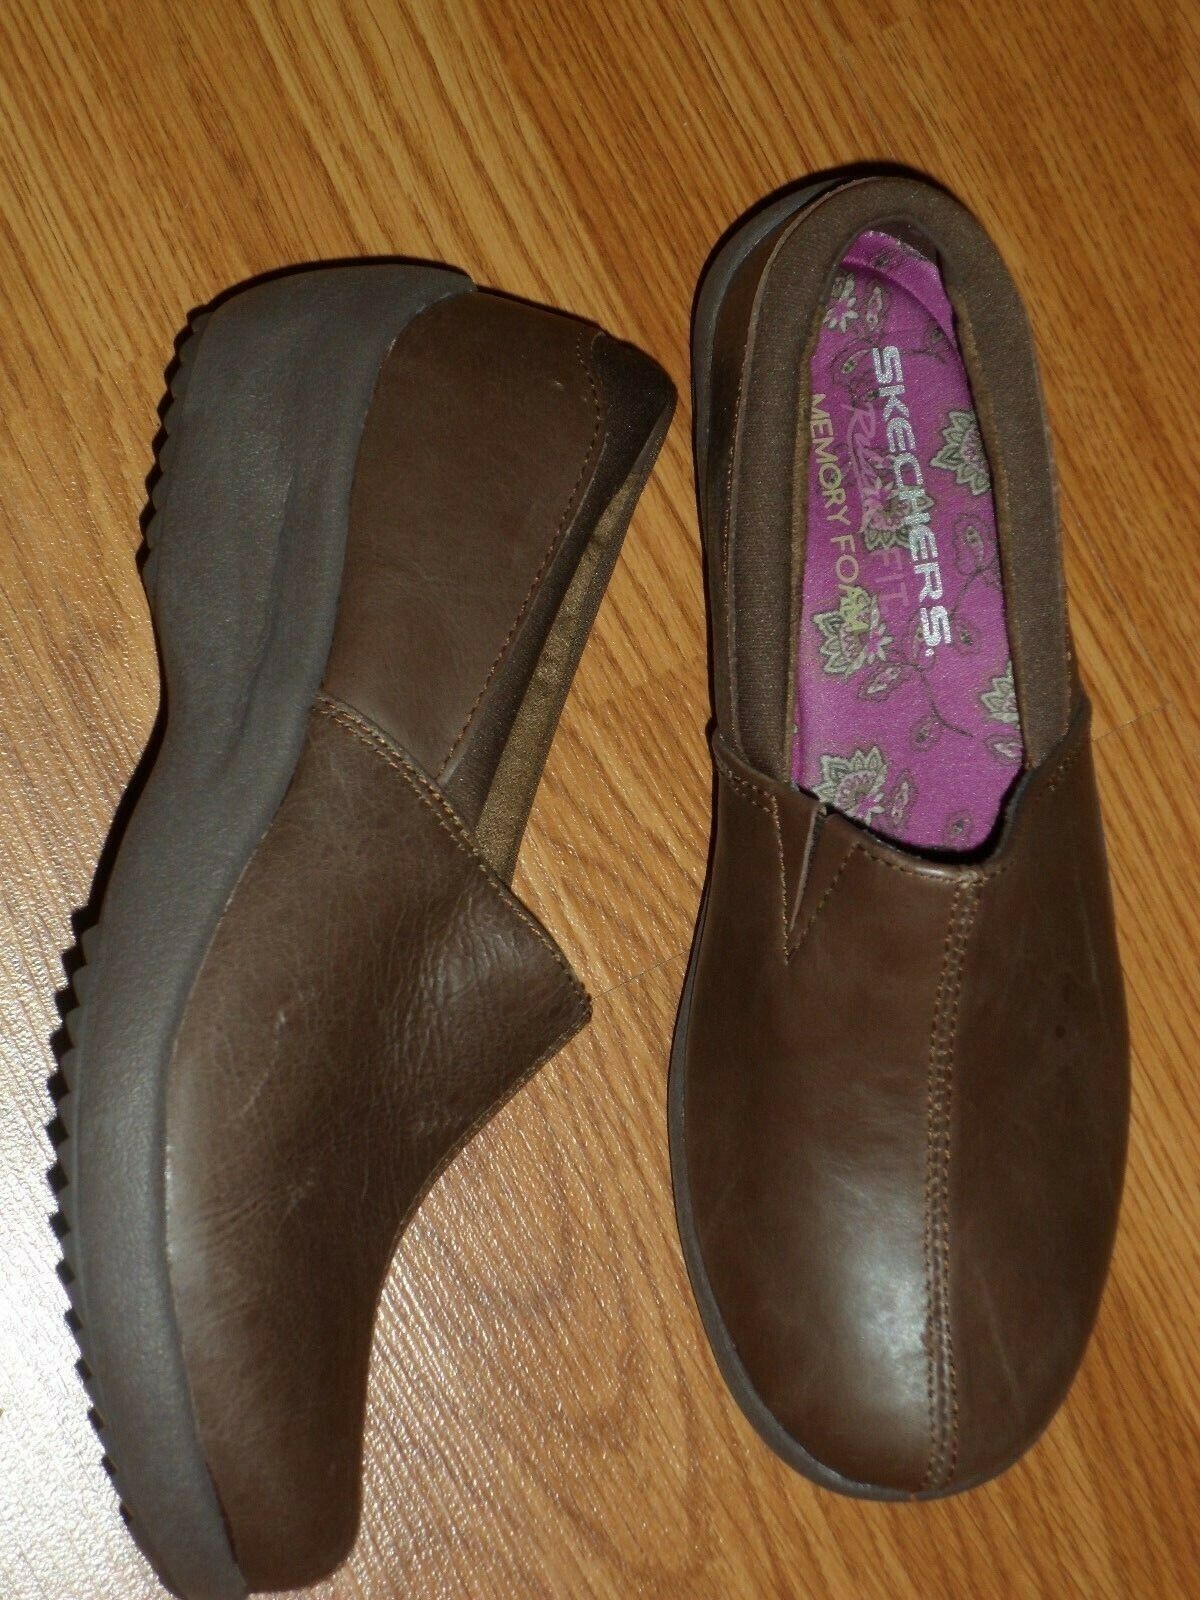 Skechers Women's Loafers Shoes Size 6M 